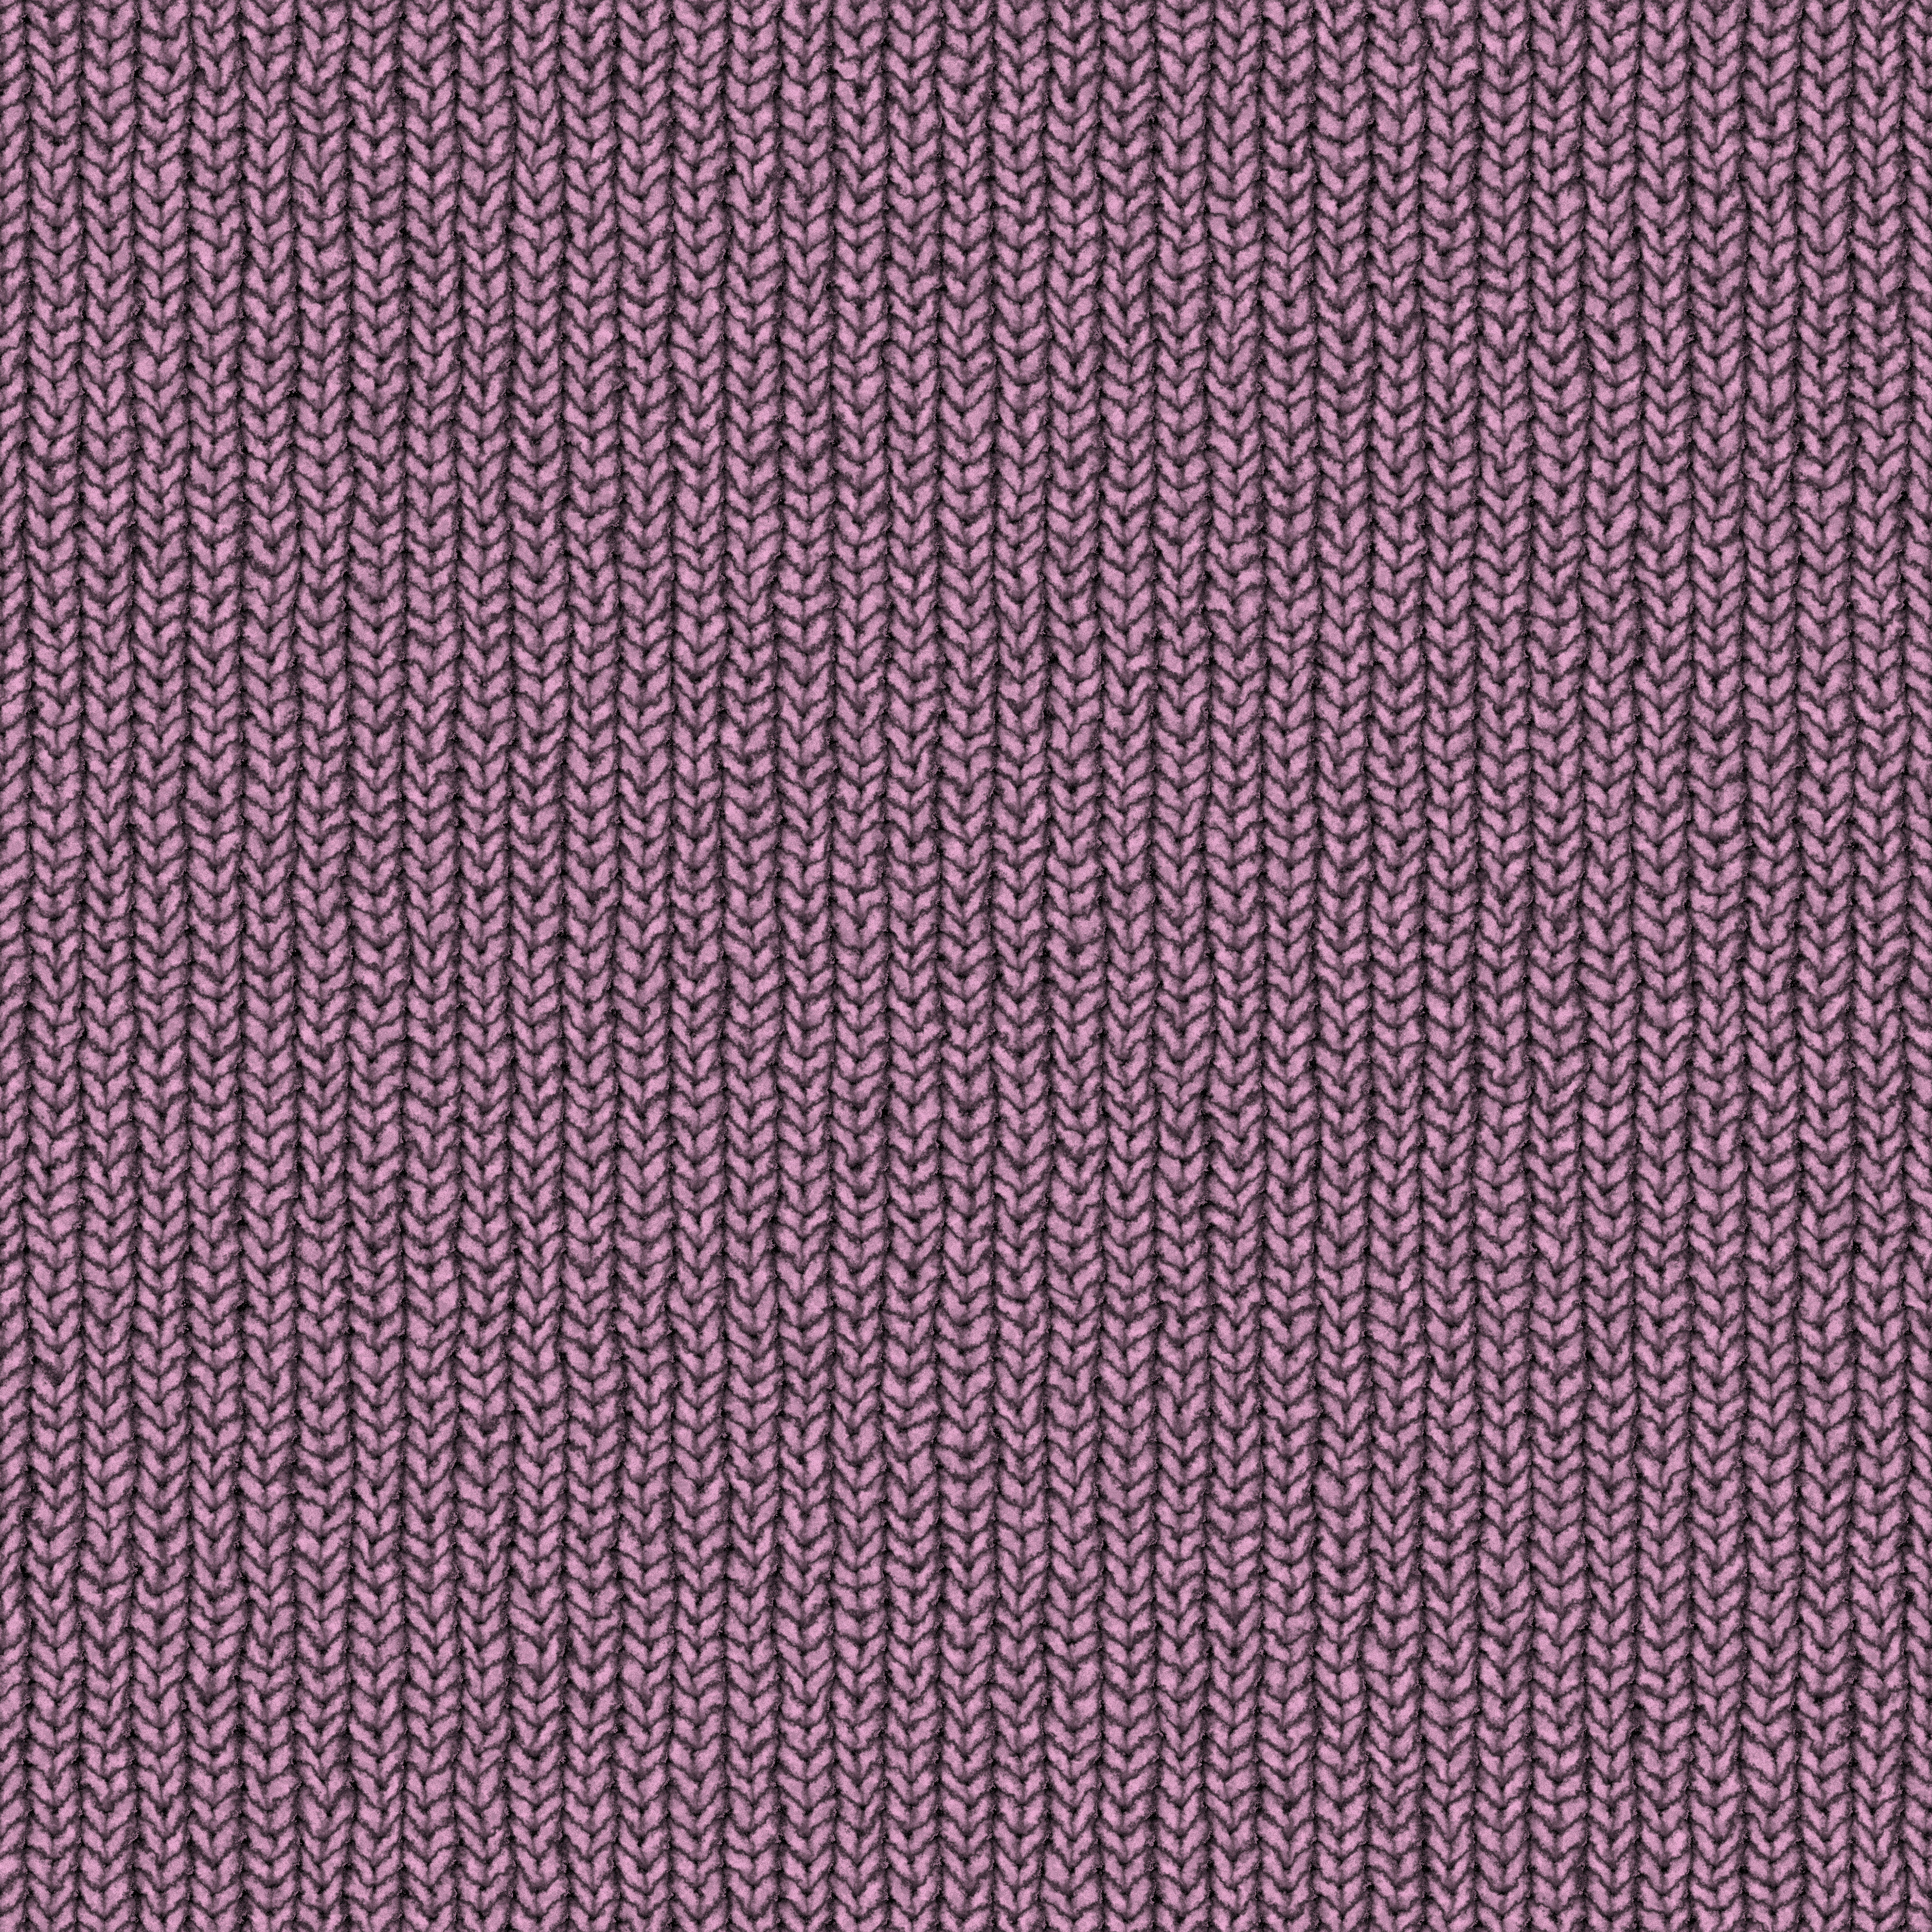 Another Knitted Wool Fabric Background Wwwmyfreetexturescom